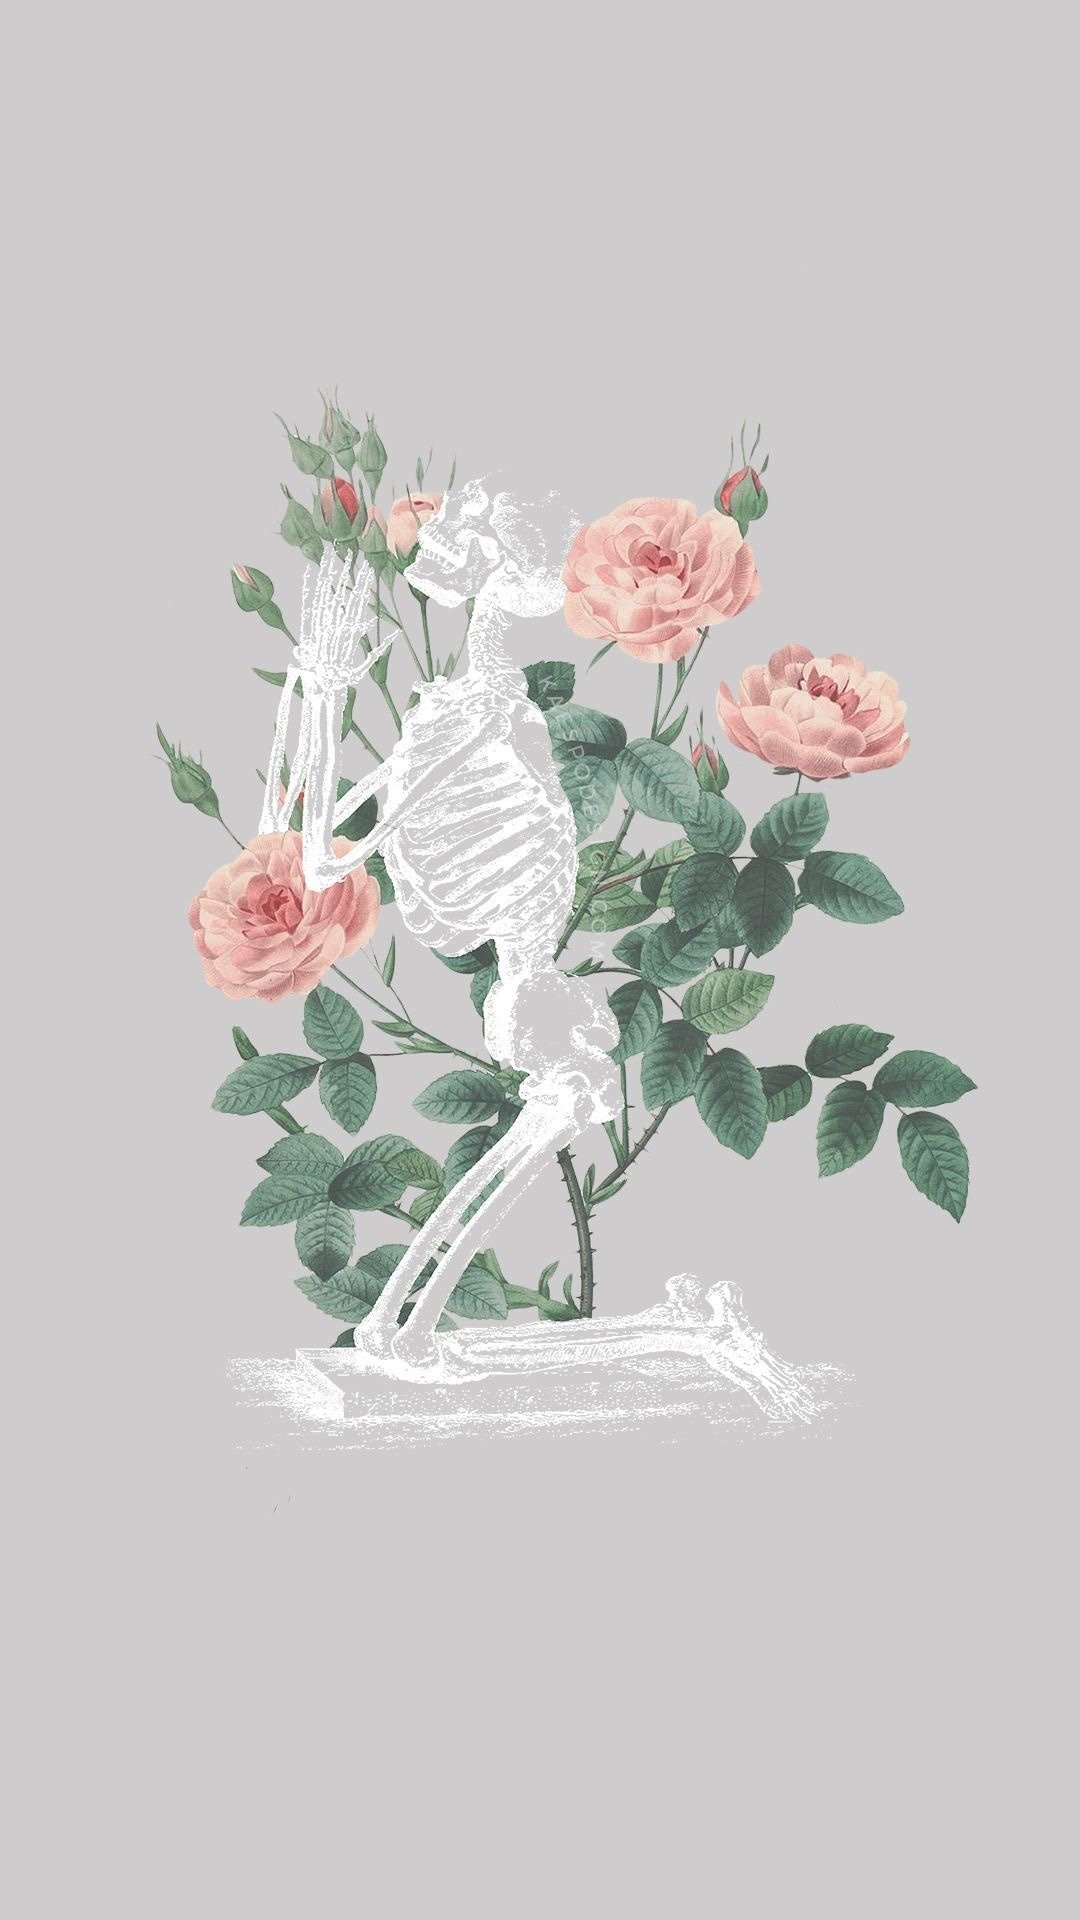 Skeleton With Flower - Aesthetic